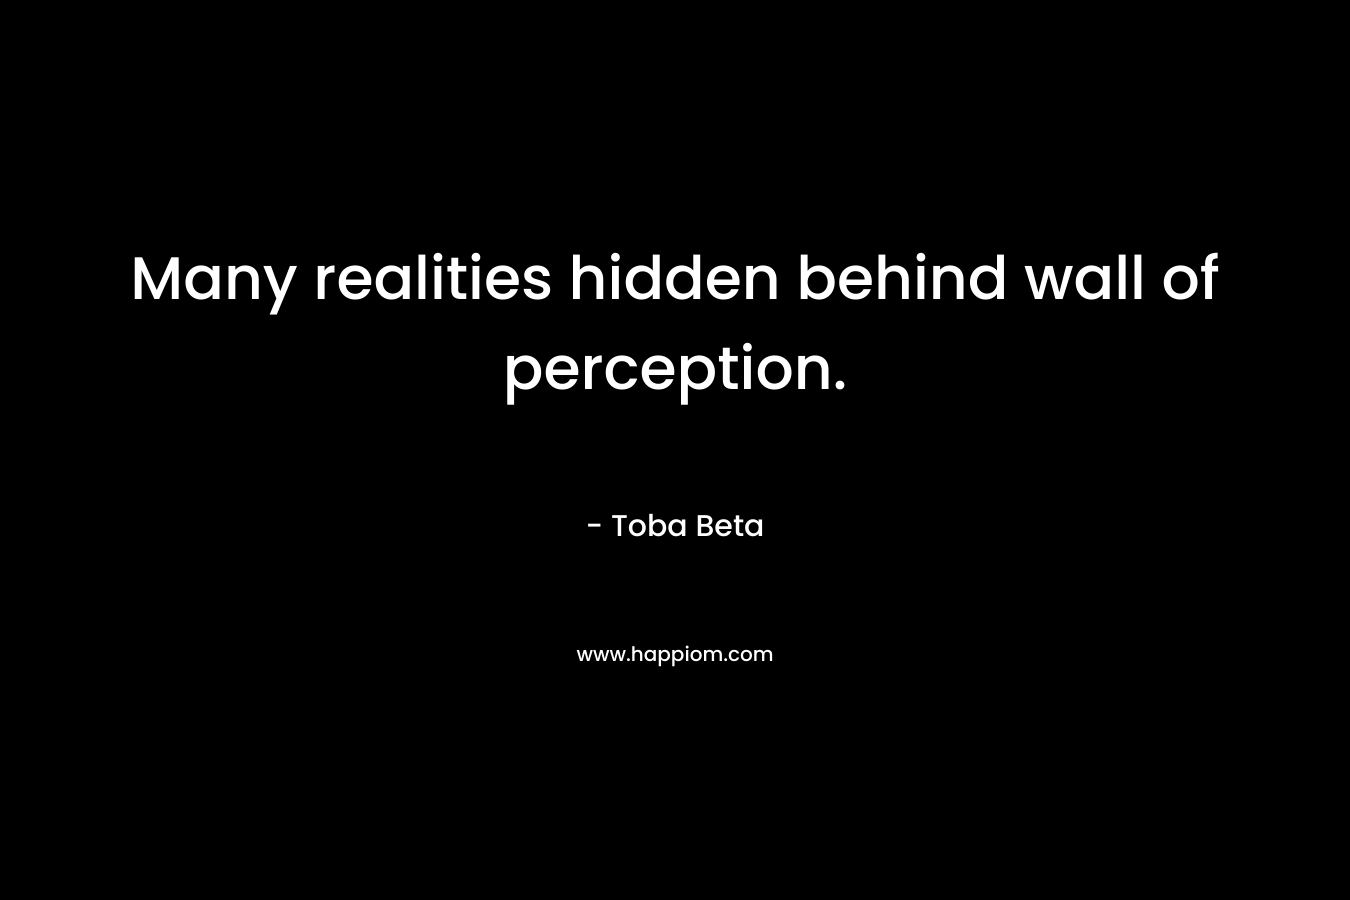 Many realities hidden behind wall of perception.